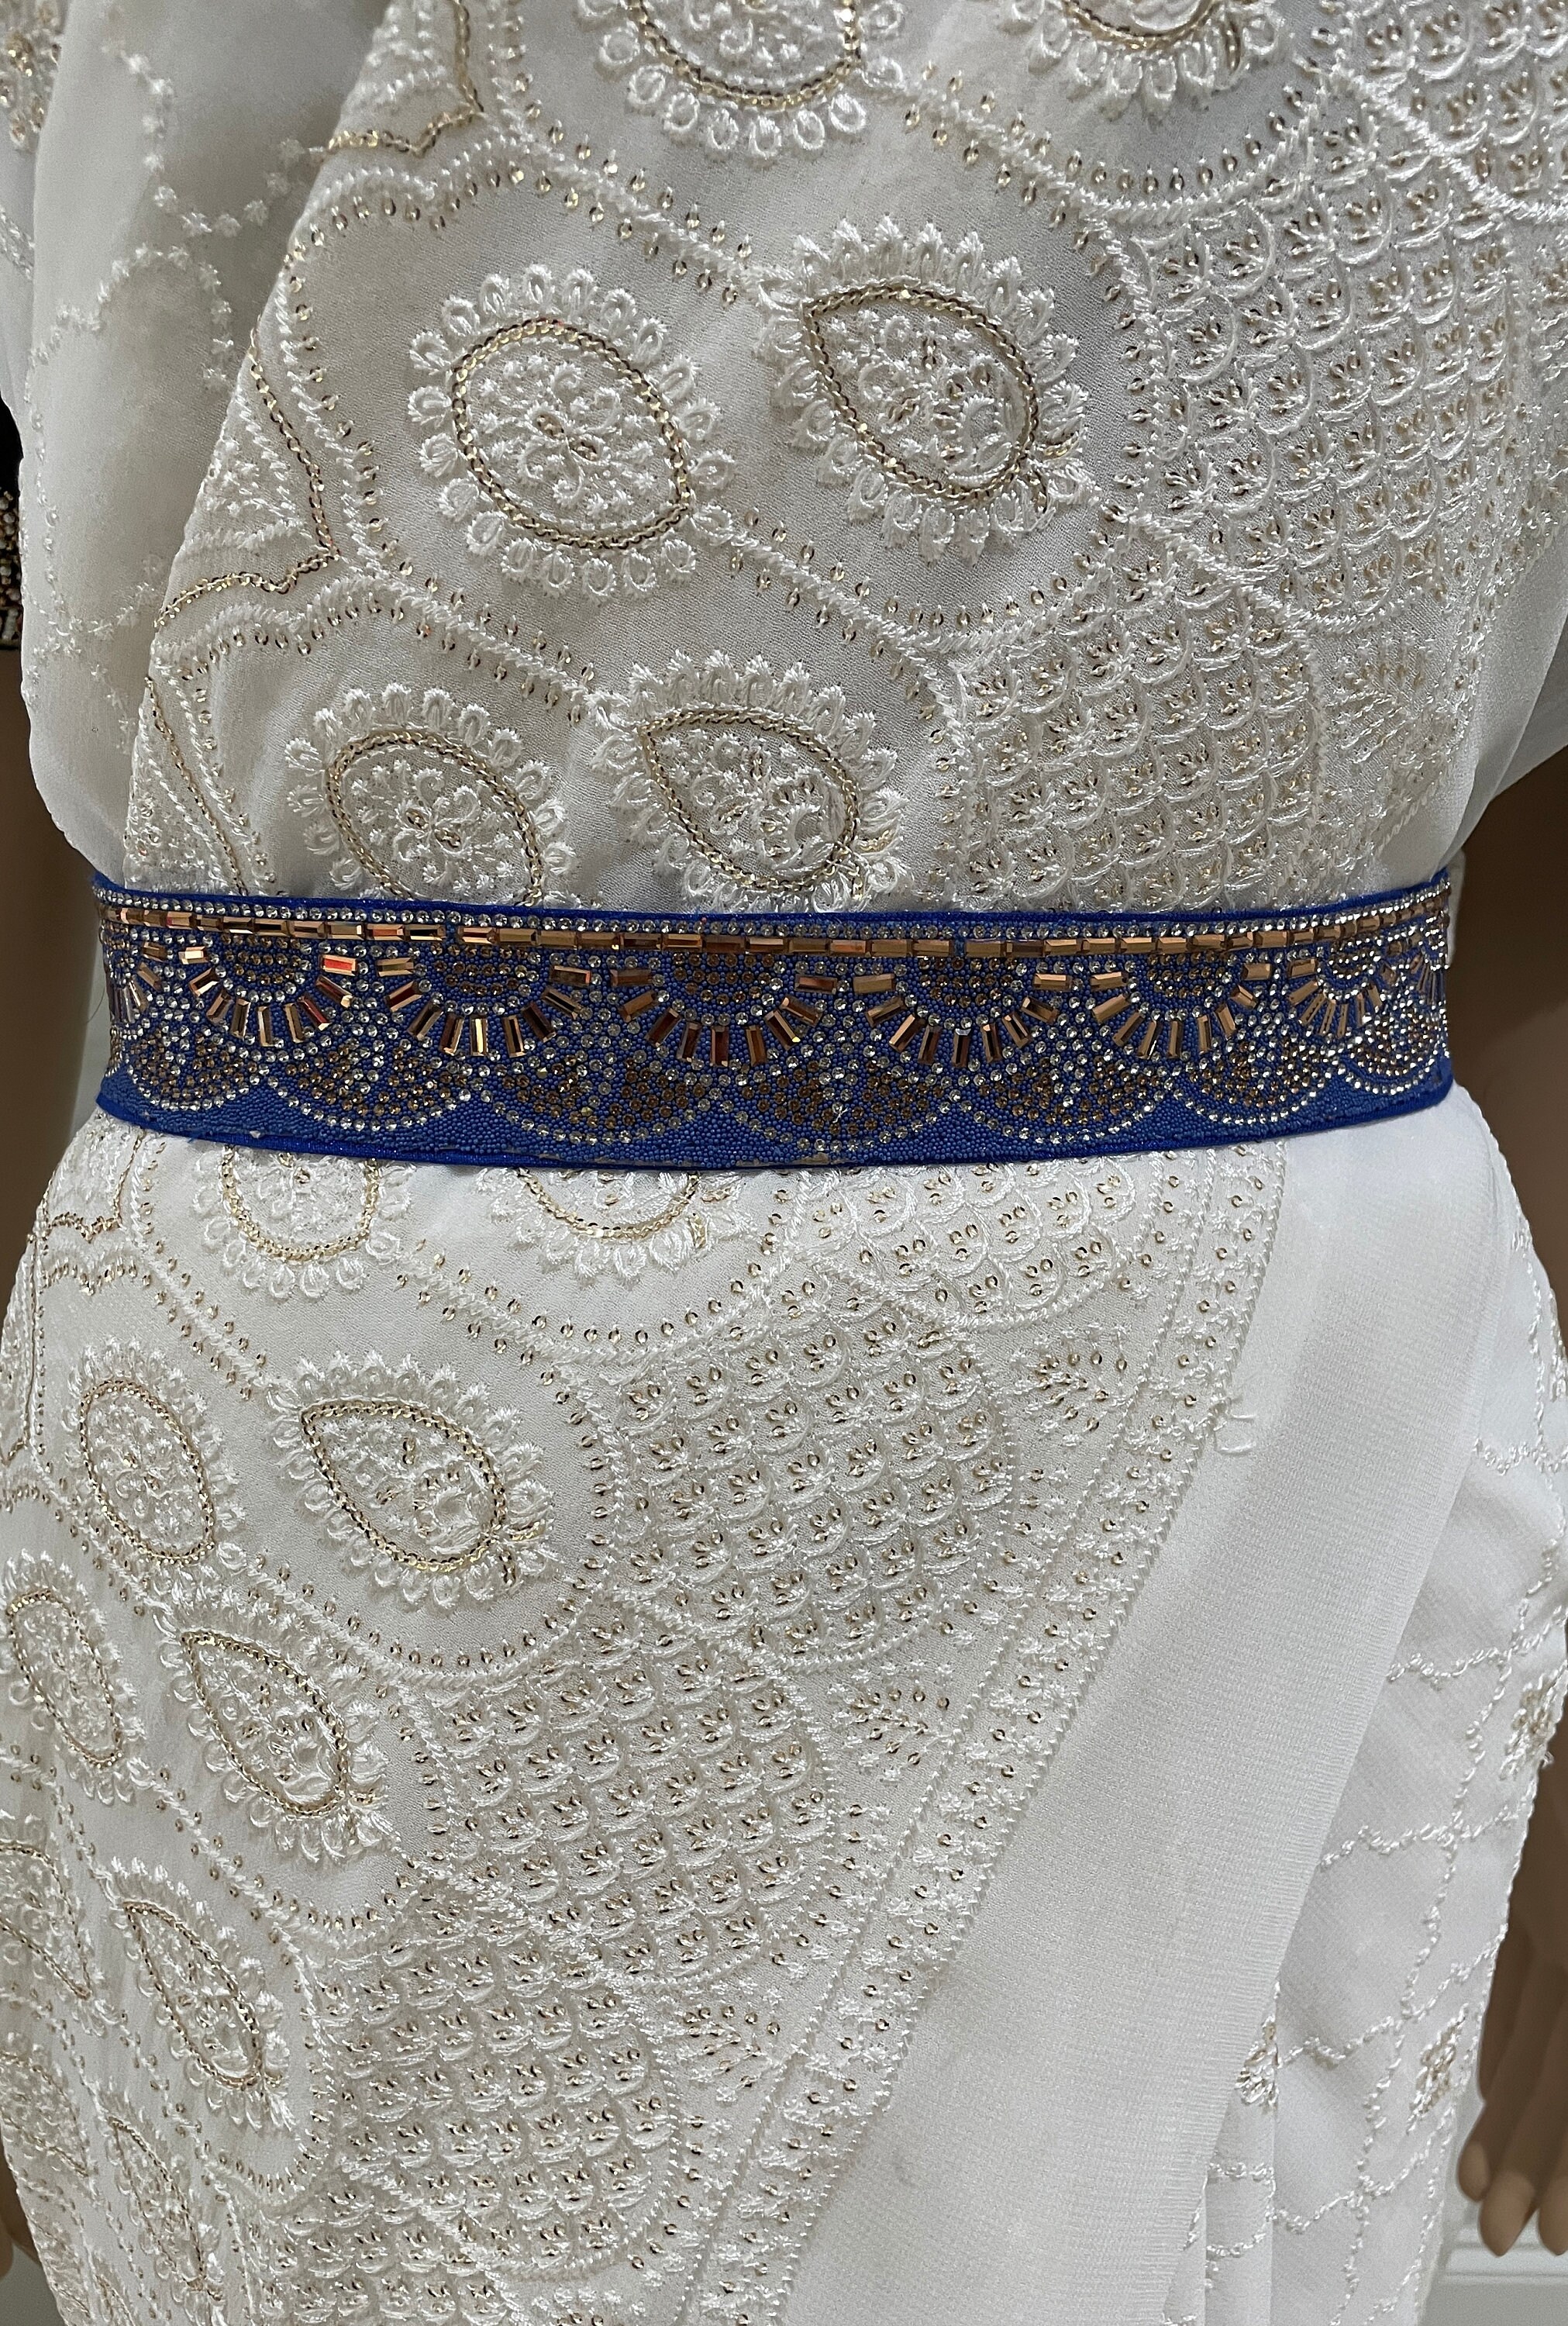 SAREE Belt-return Gift-adults waist Belt Hip Belts maggam Work Belt  Kamarbandh Indian Ethnic Wear-blue 